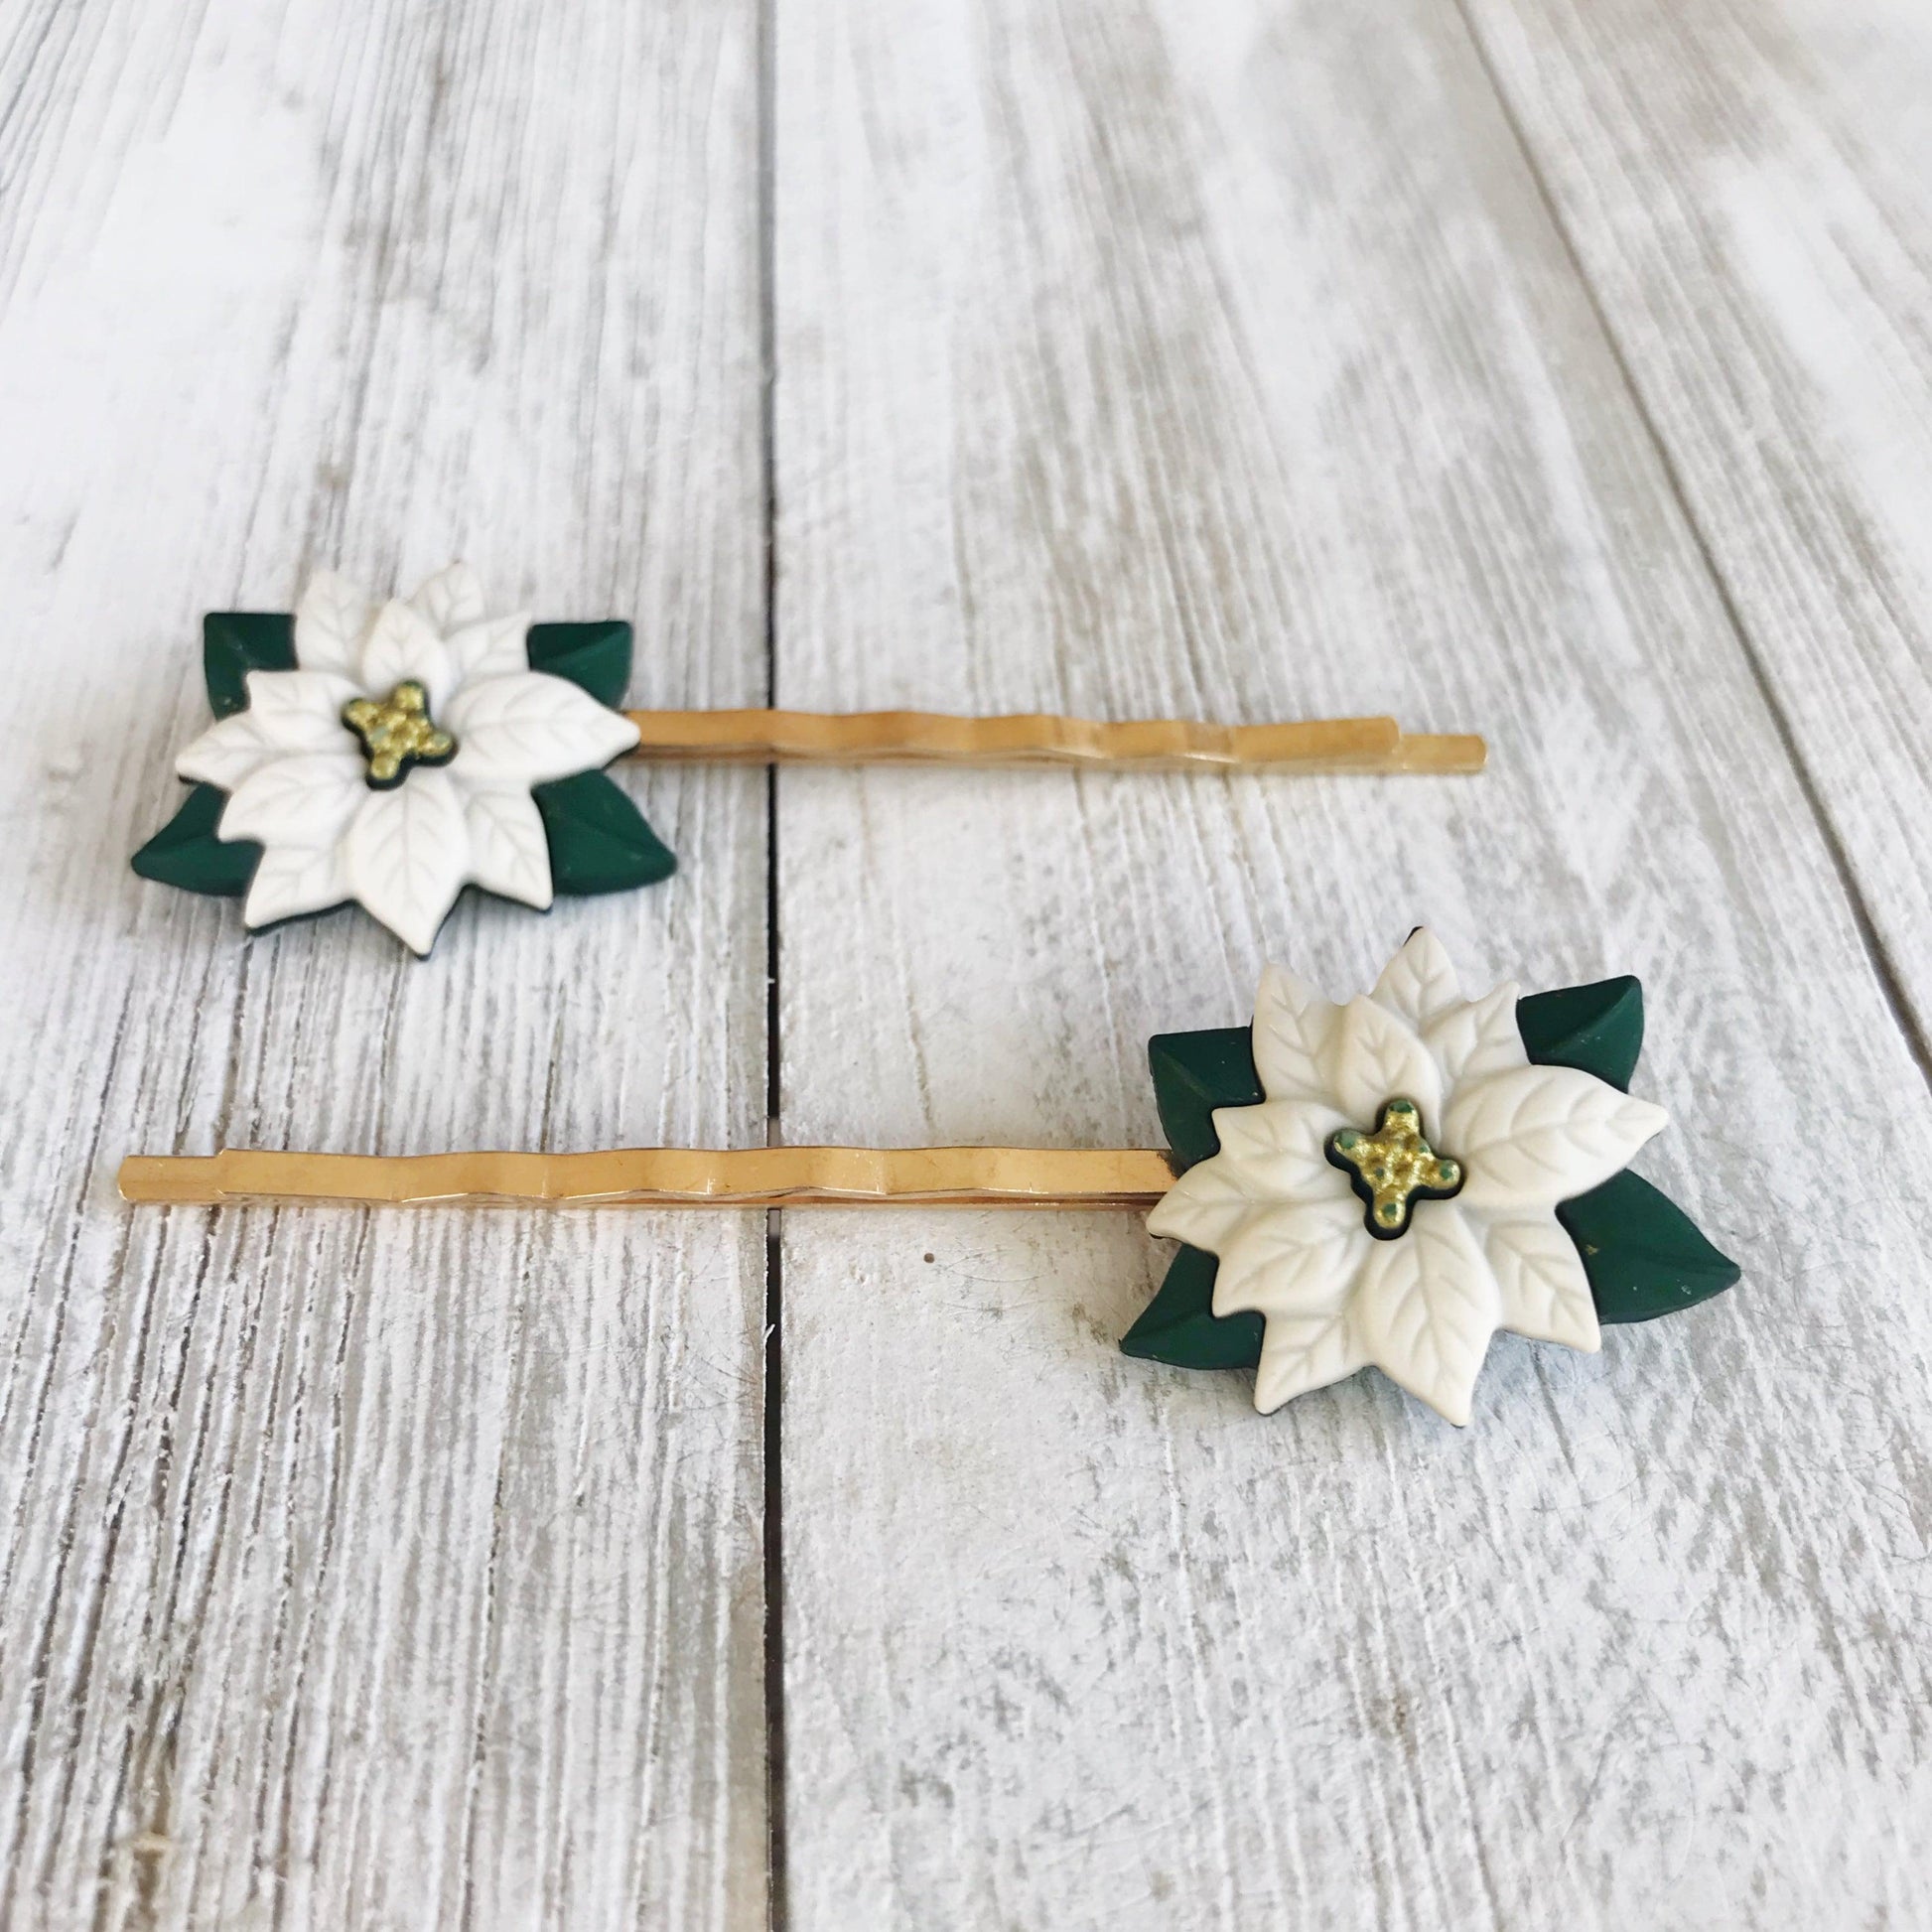 White Flower Chrysanthemum Hair Pins - Festive Christmas Holiday Accessories